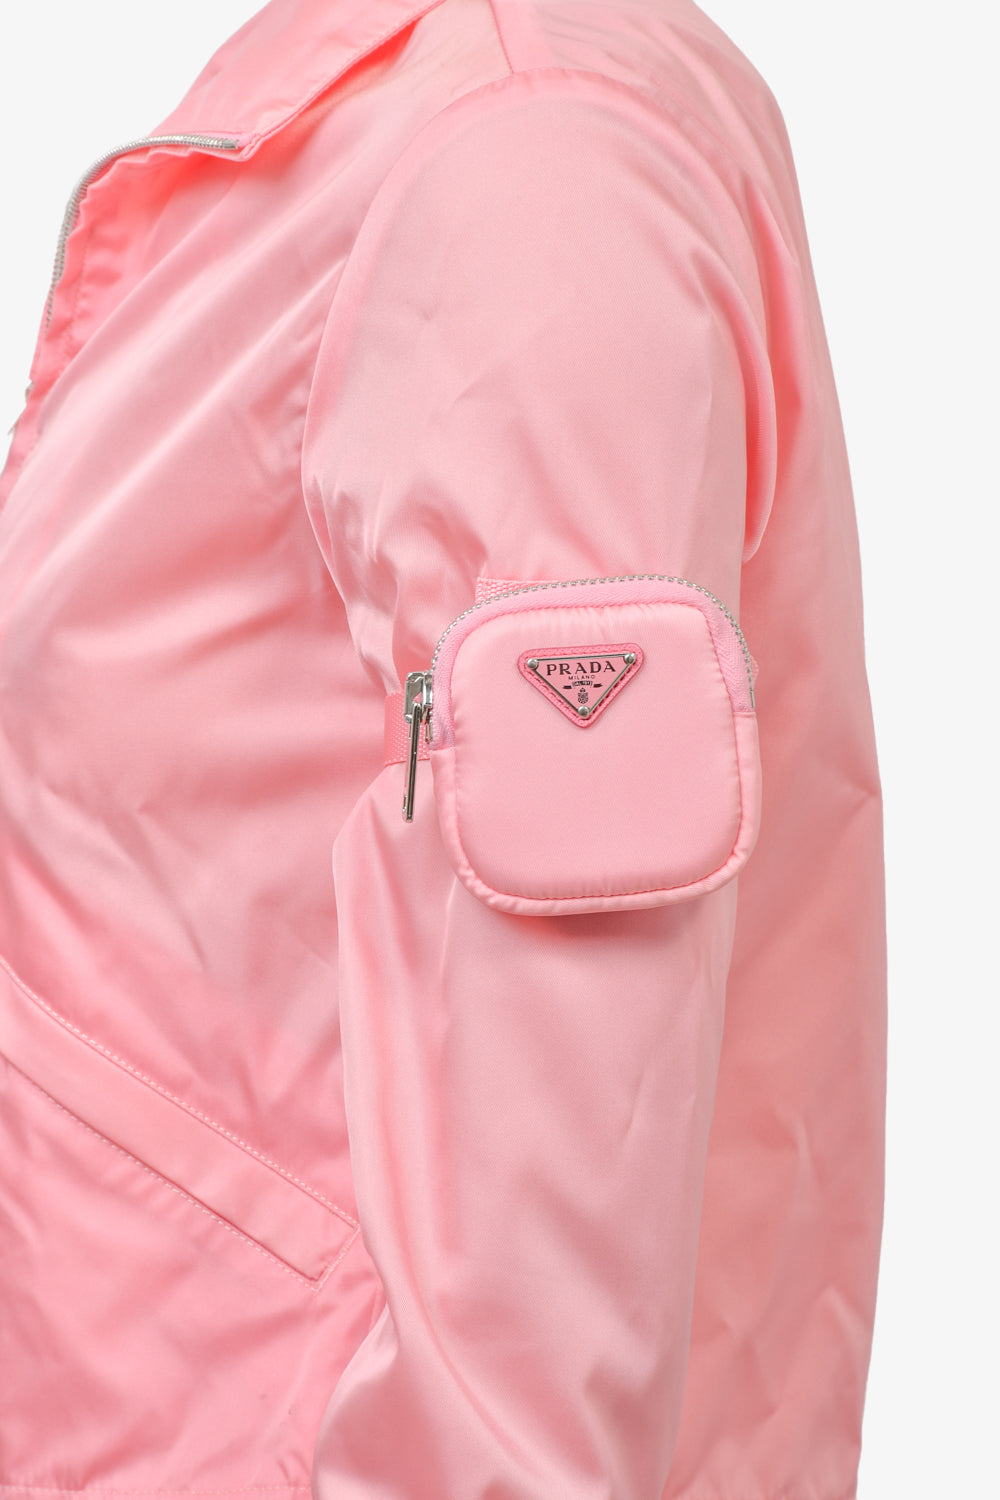 Prada Pink Re-Nylon Zip-Up Jacket w/ Zip Pouch sz 36